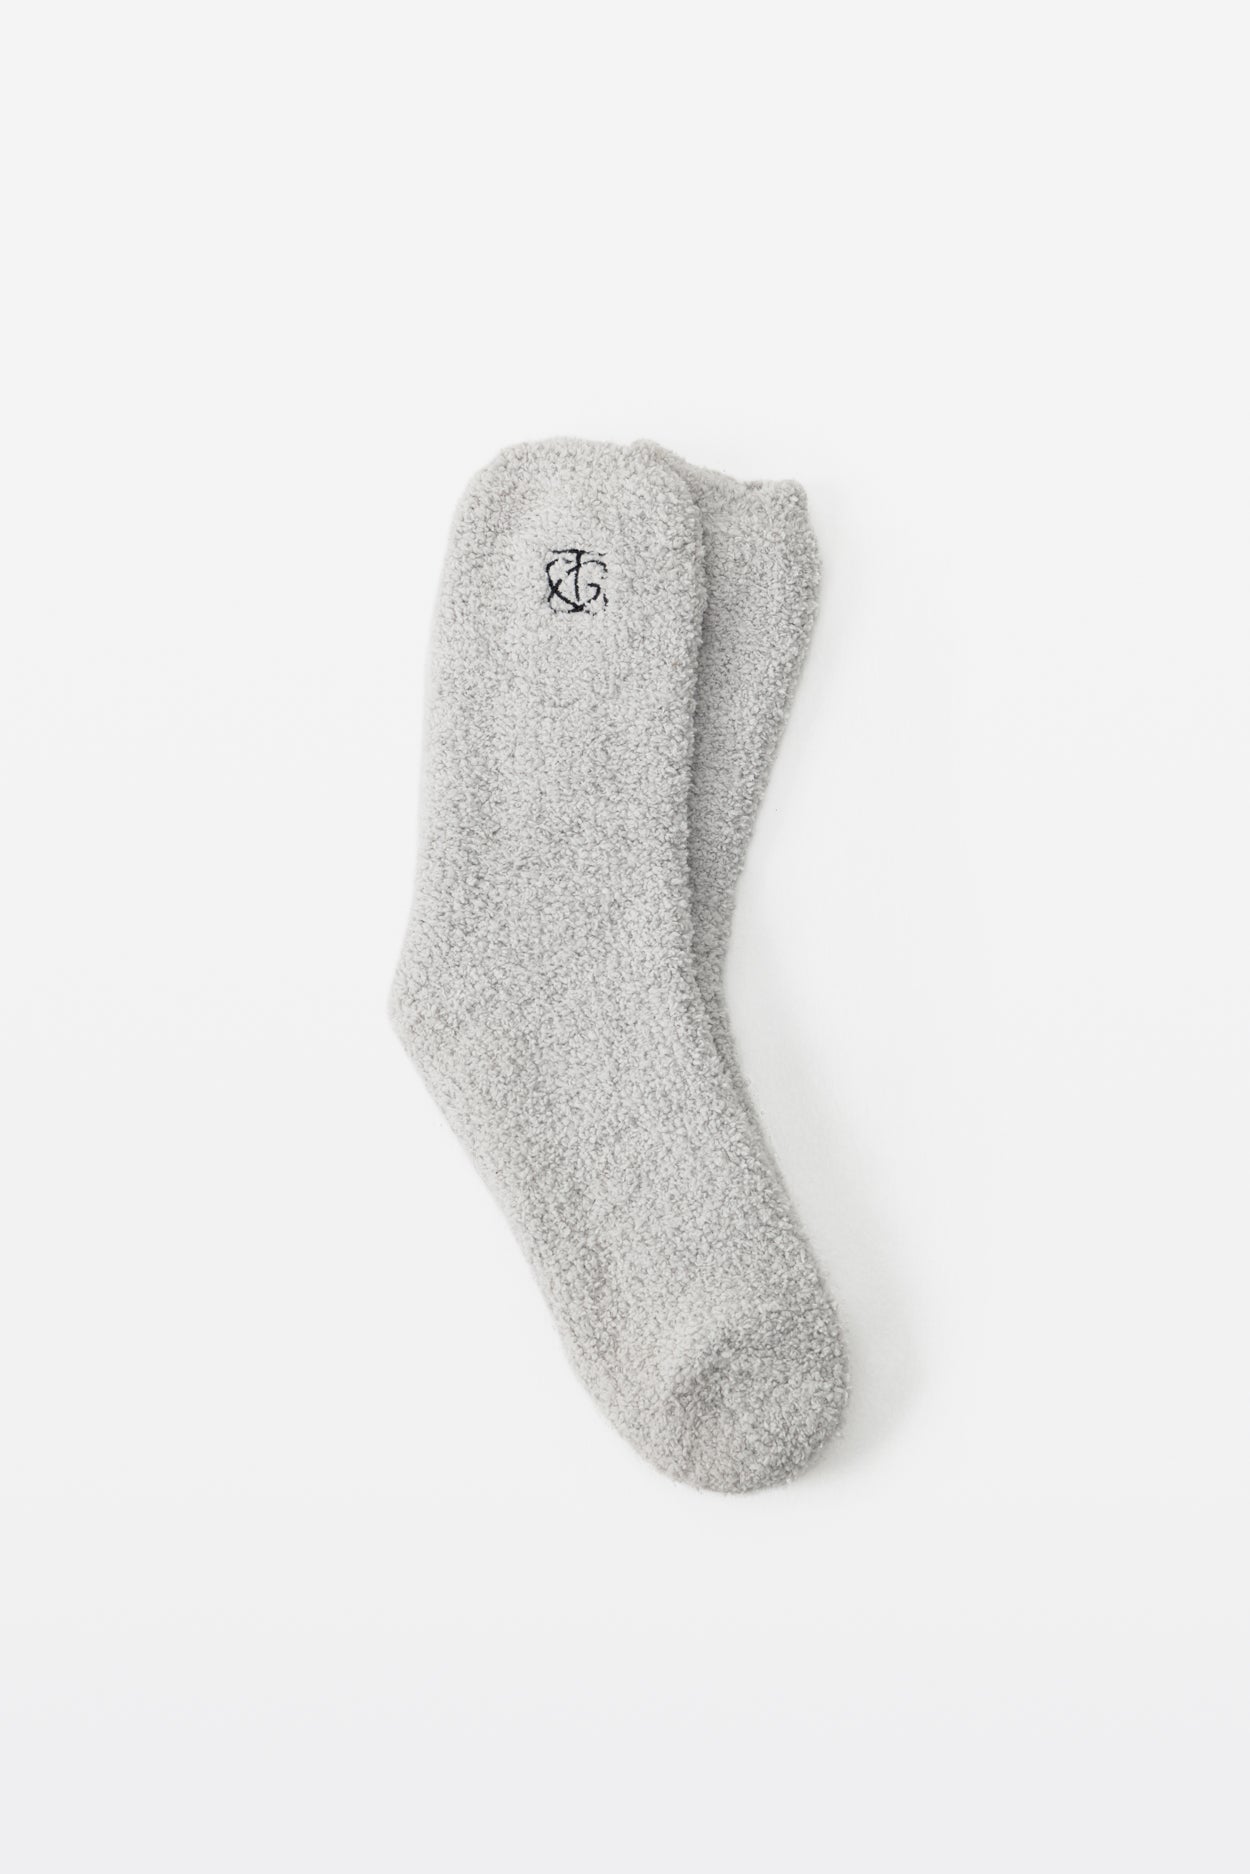 Light Grey Soft Plush Socks - Socks - Touchofgod.co